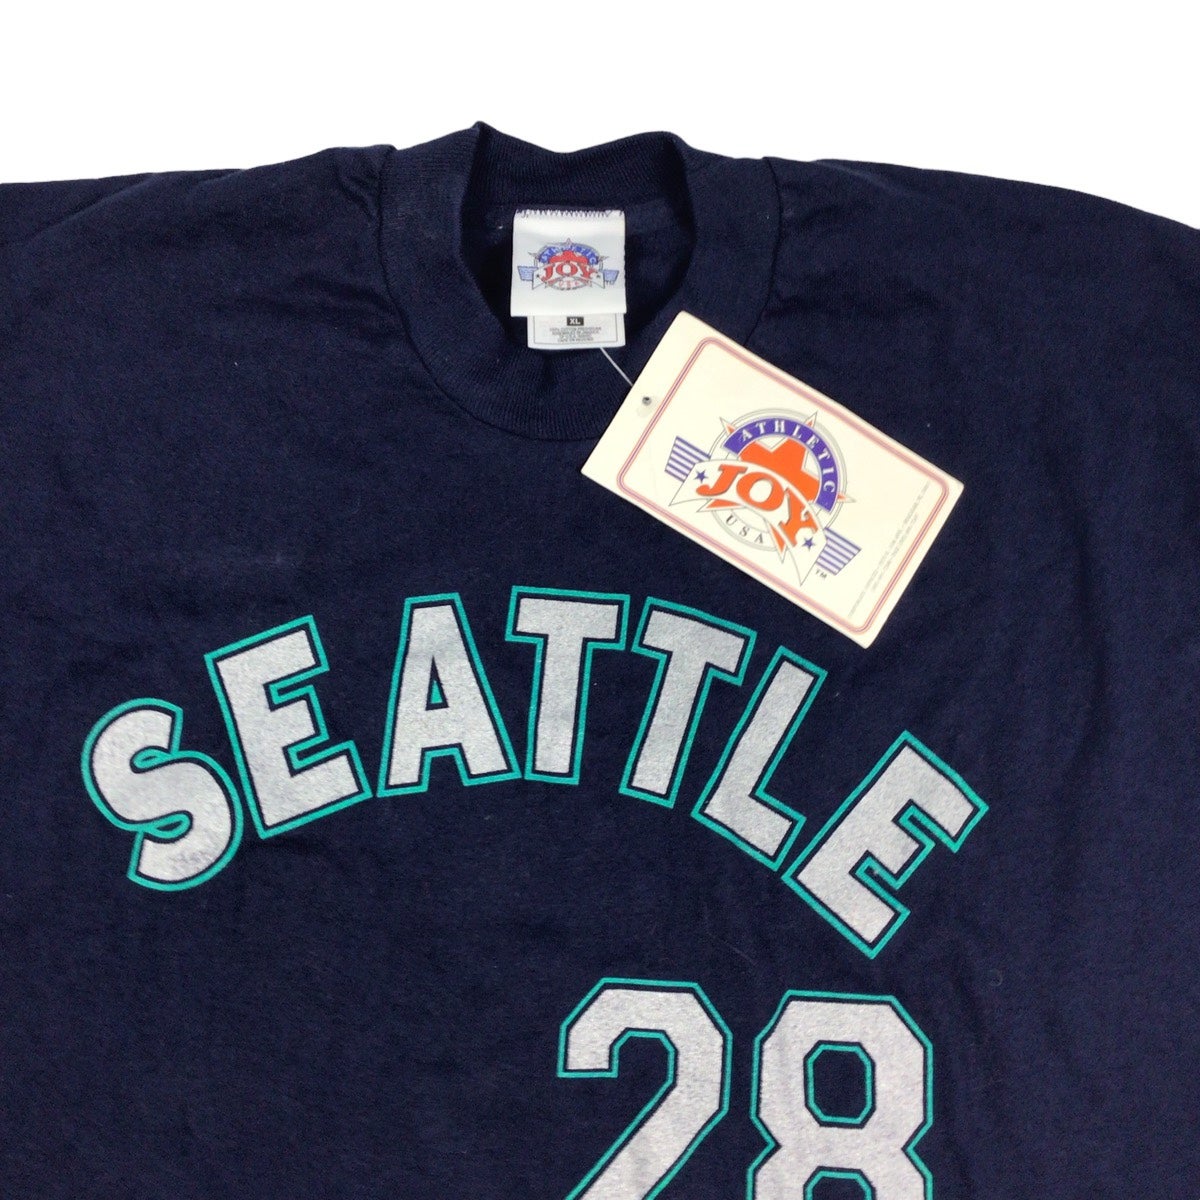 Seattle Mariners Joey Cora Game Jersey 20th Anniversary